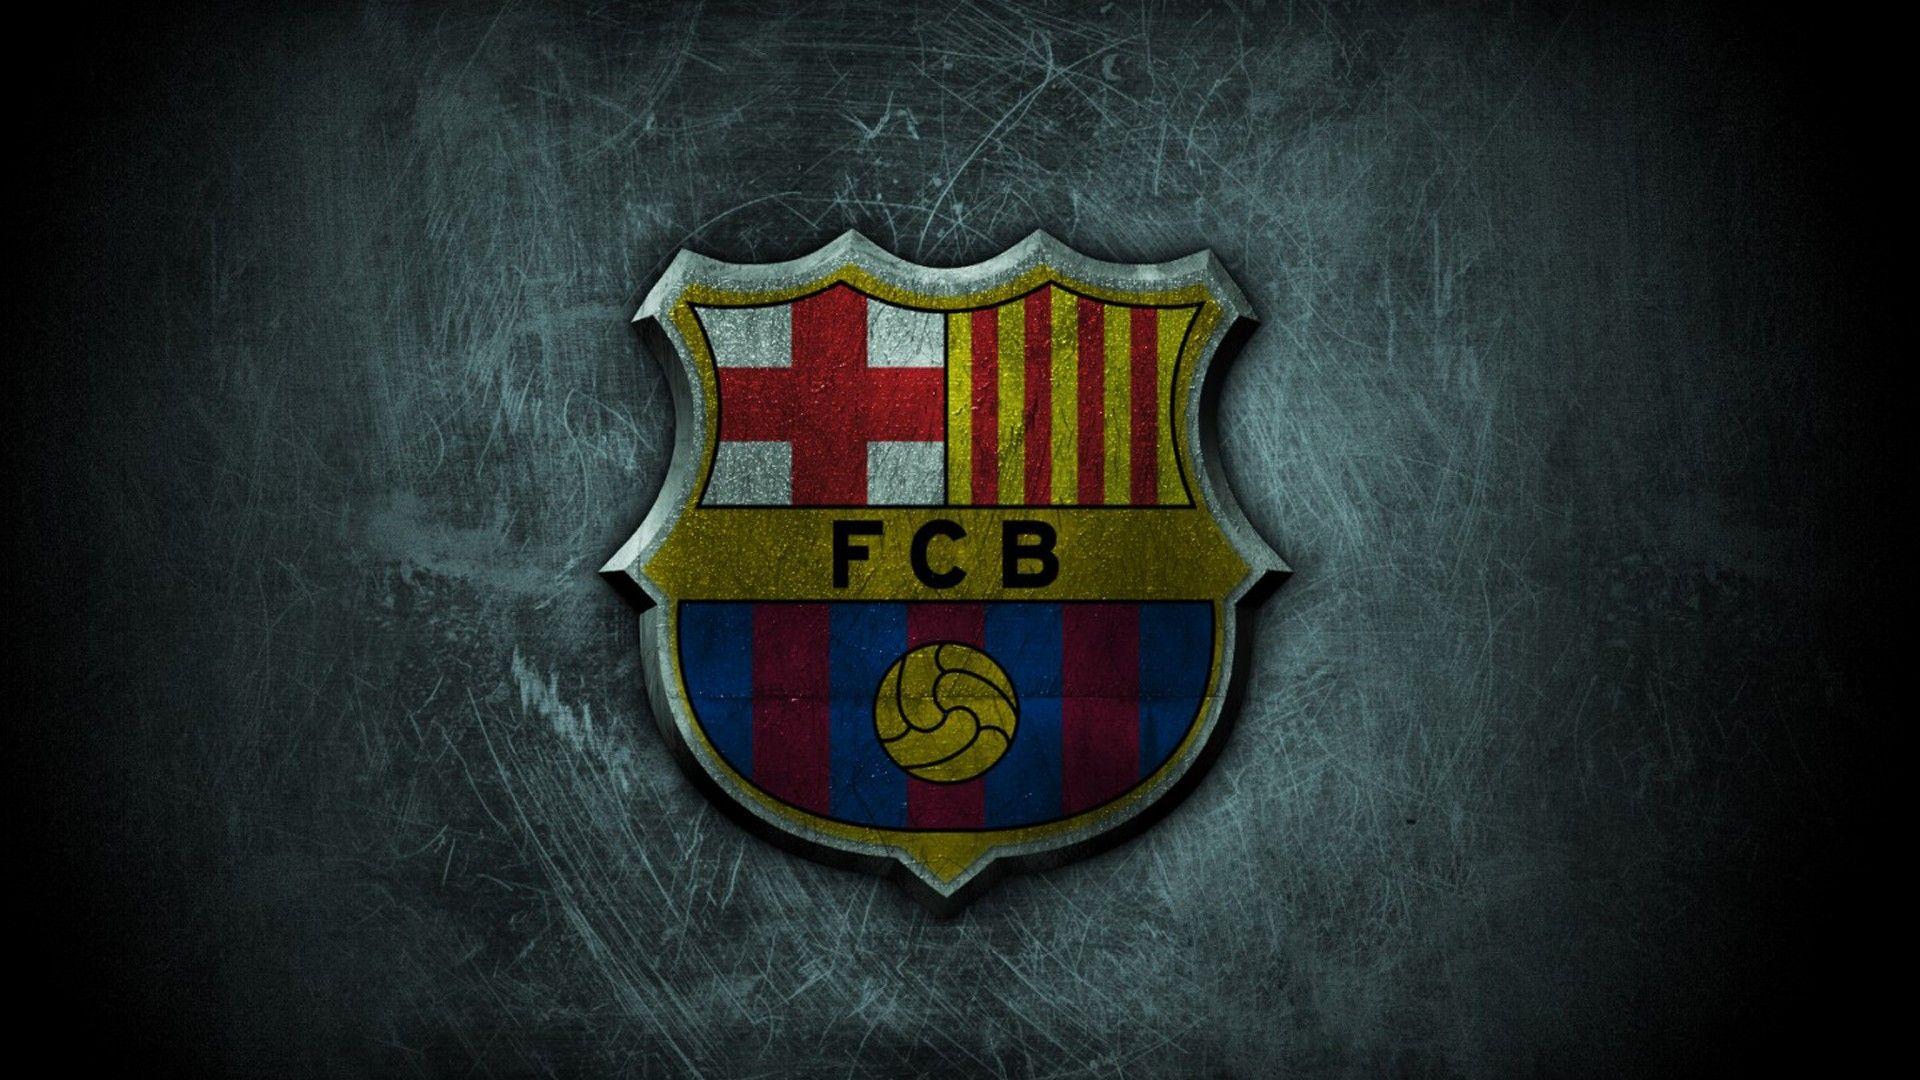 FCB Football Club Logo HD Wallpaper. Widescreen Wallpaper. High